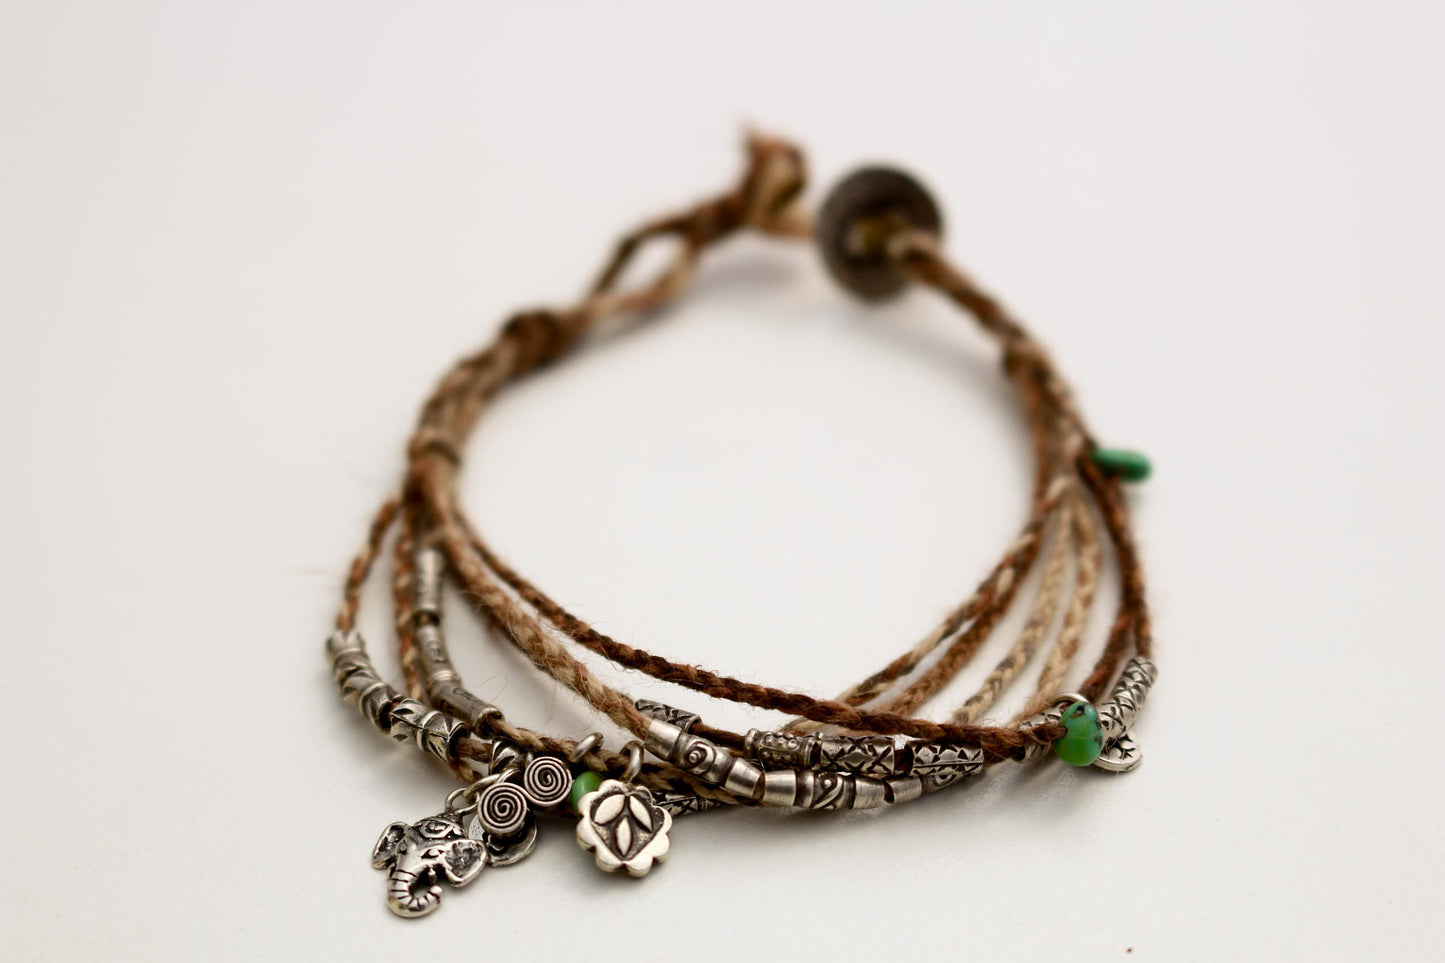 Silver Beads On Hemp Cord Bracelet